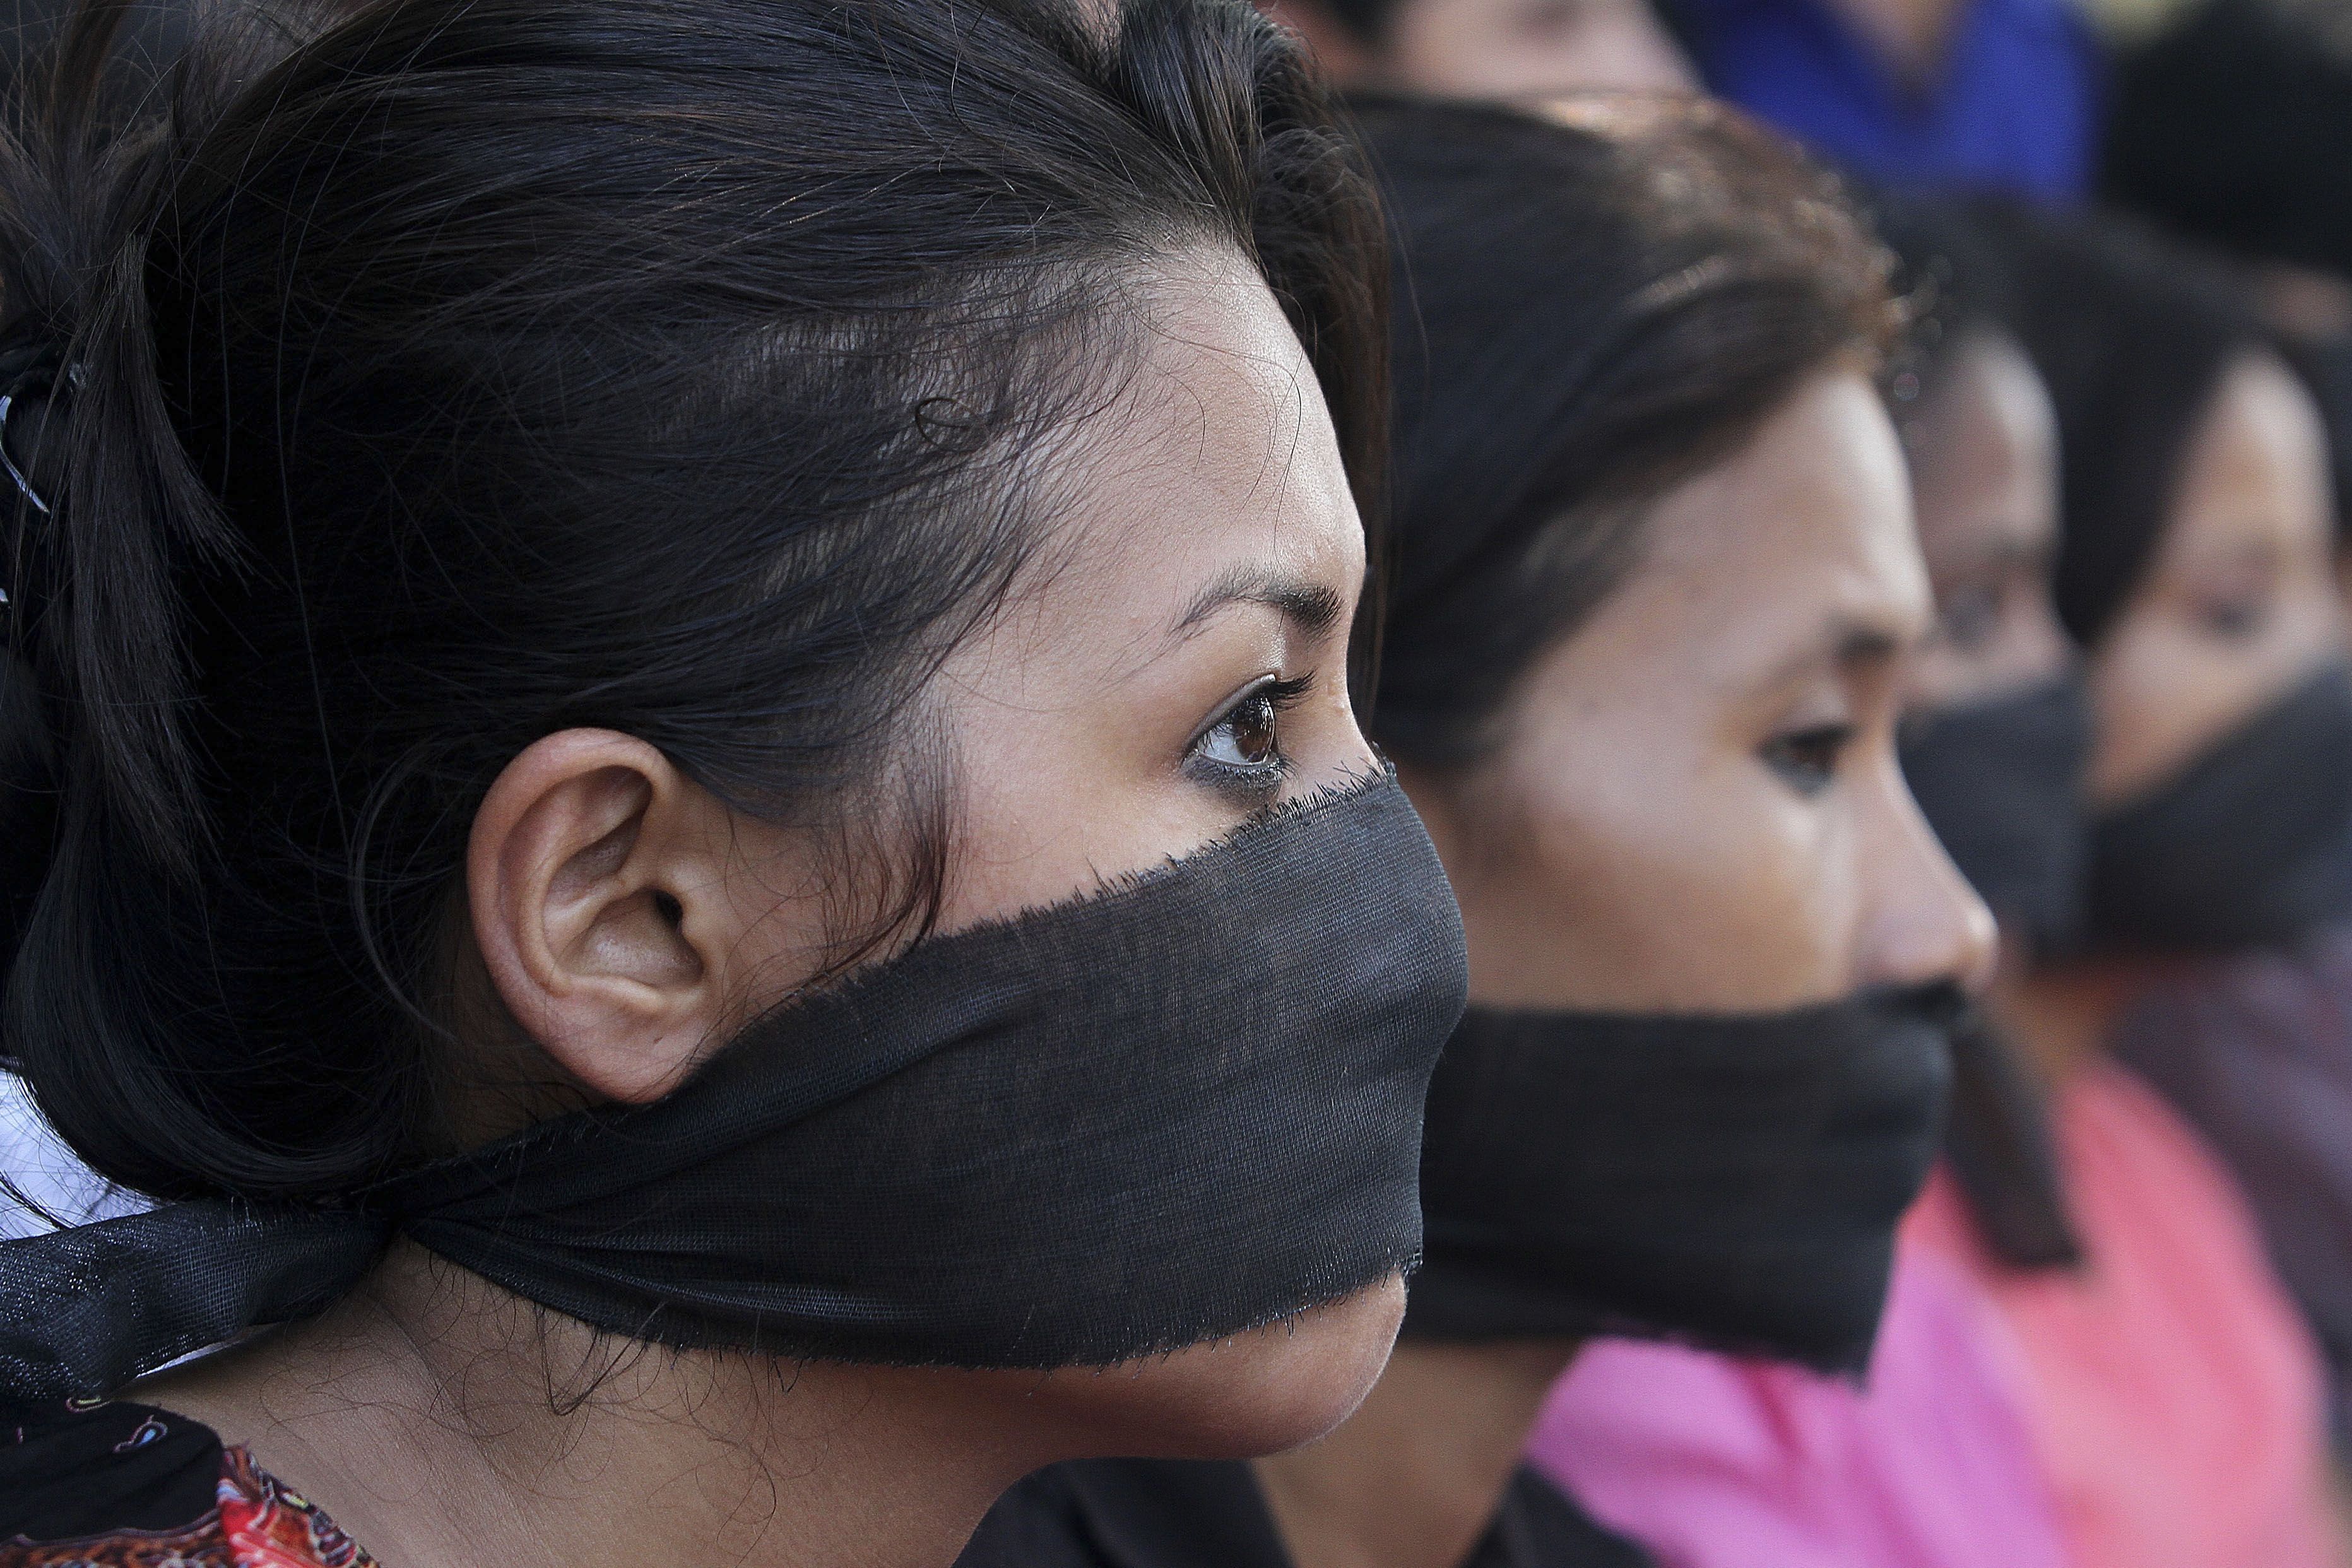 Kajal Image Xxx - Despite reforms, sexual assault survivors face systemic barriers in India |  CNN